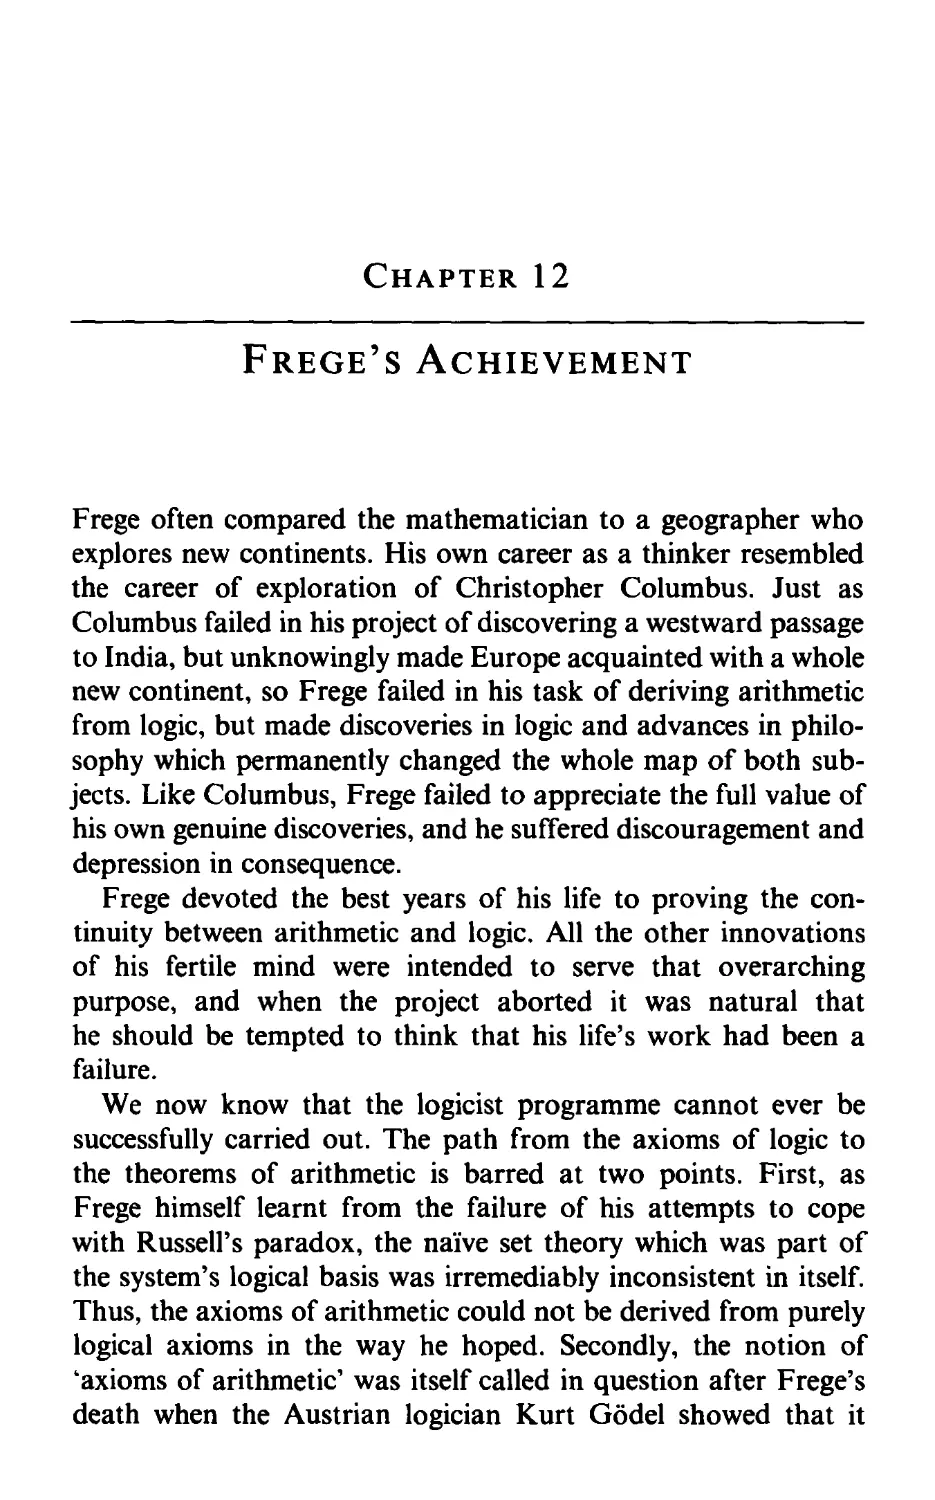 12 Frege's Achievement